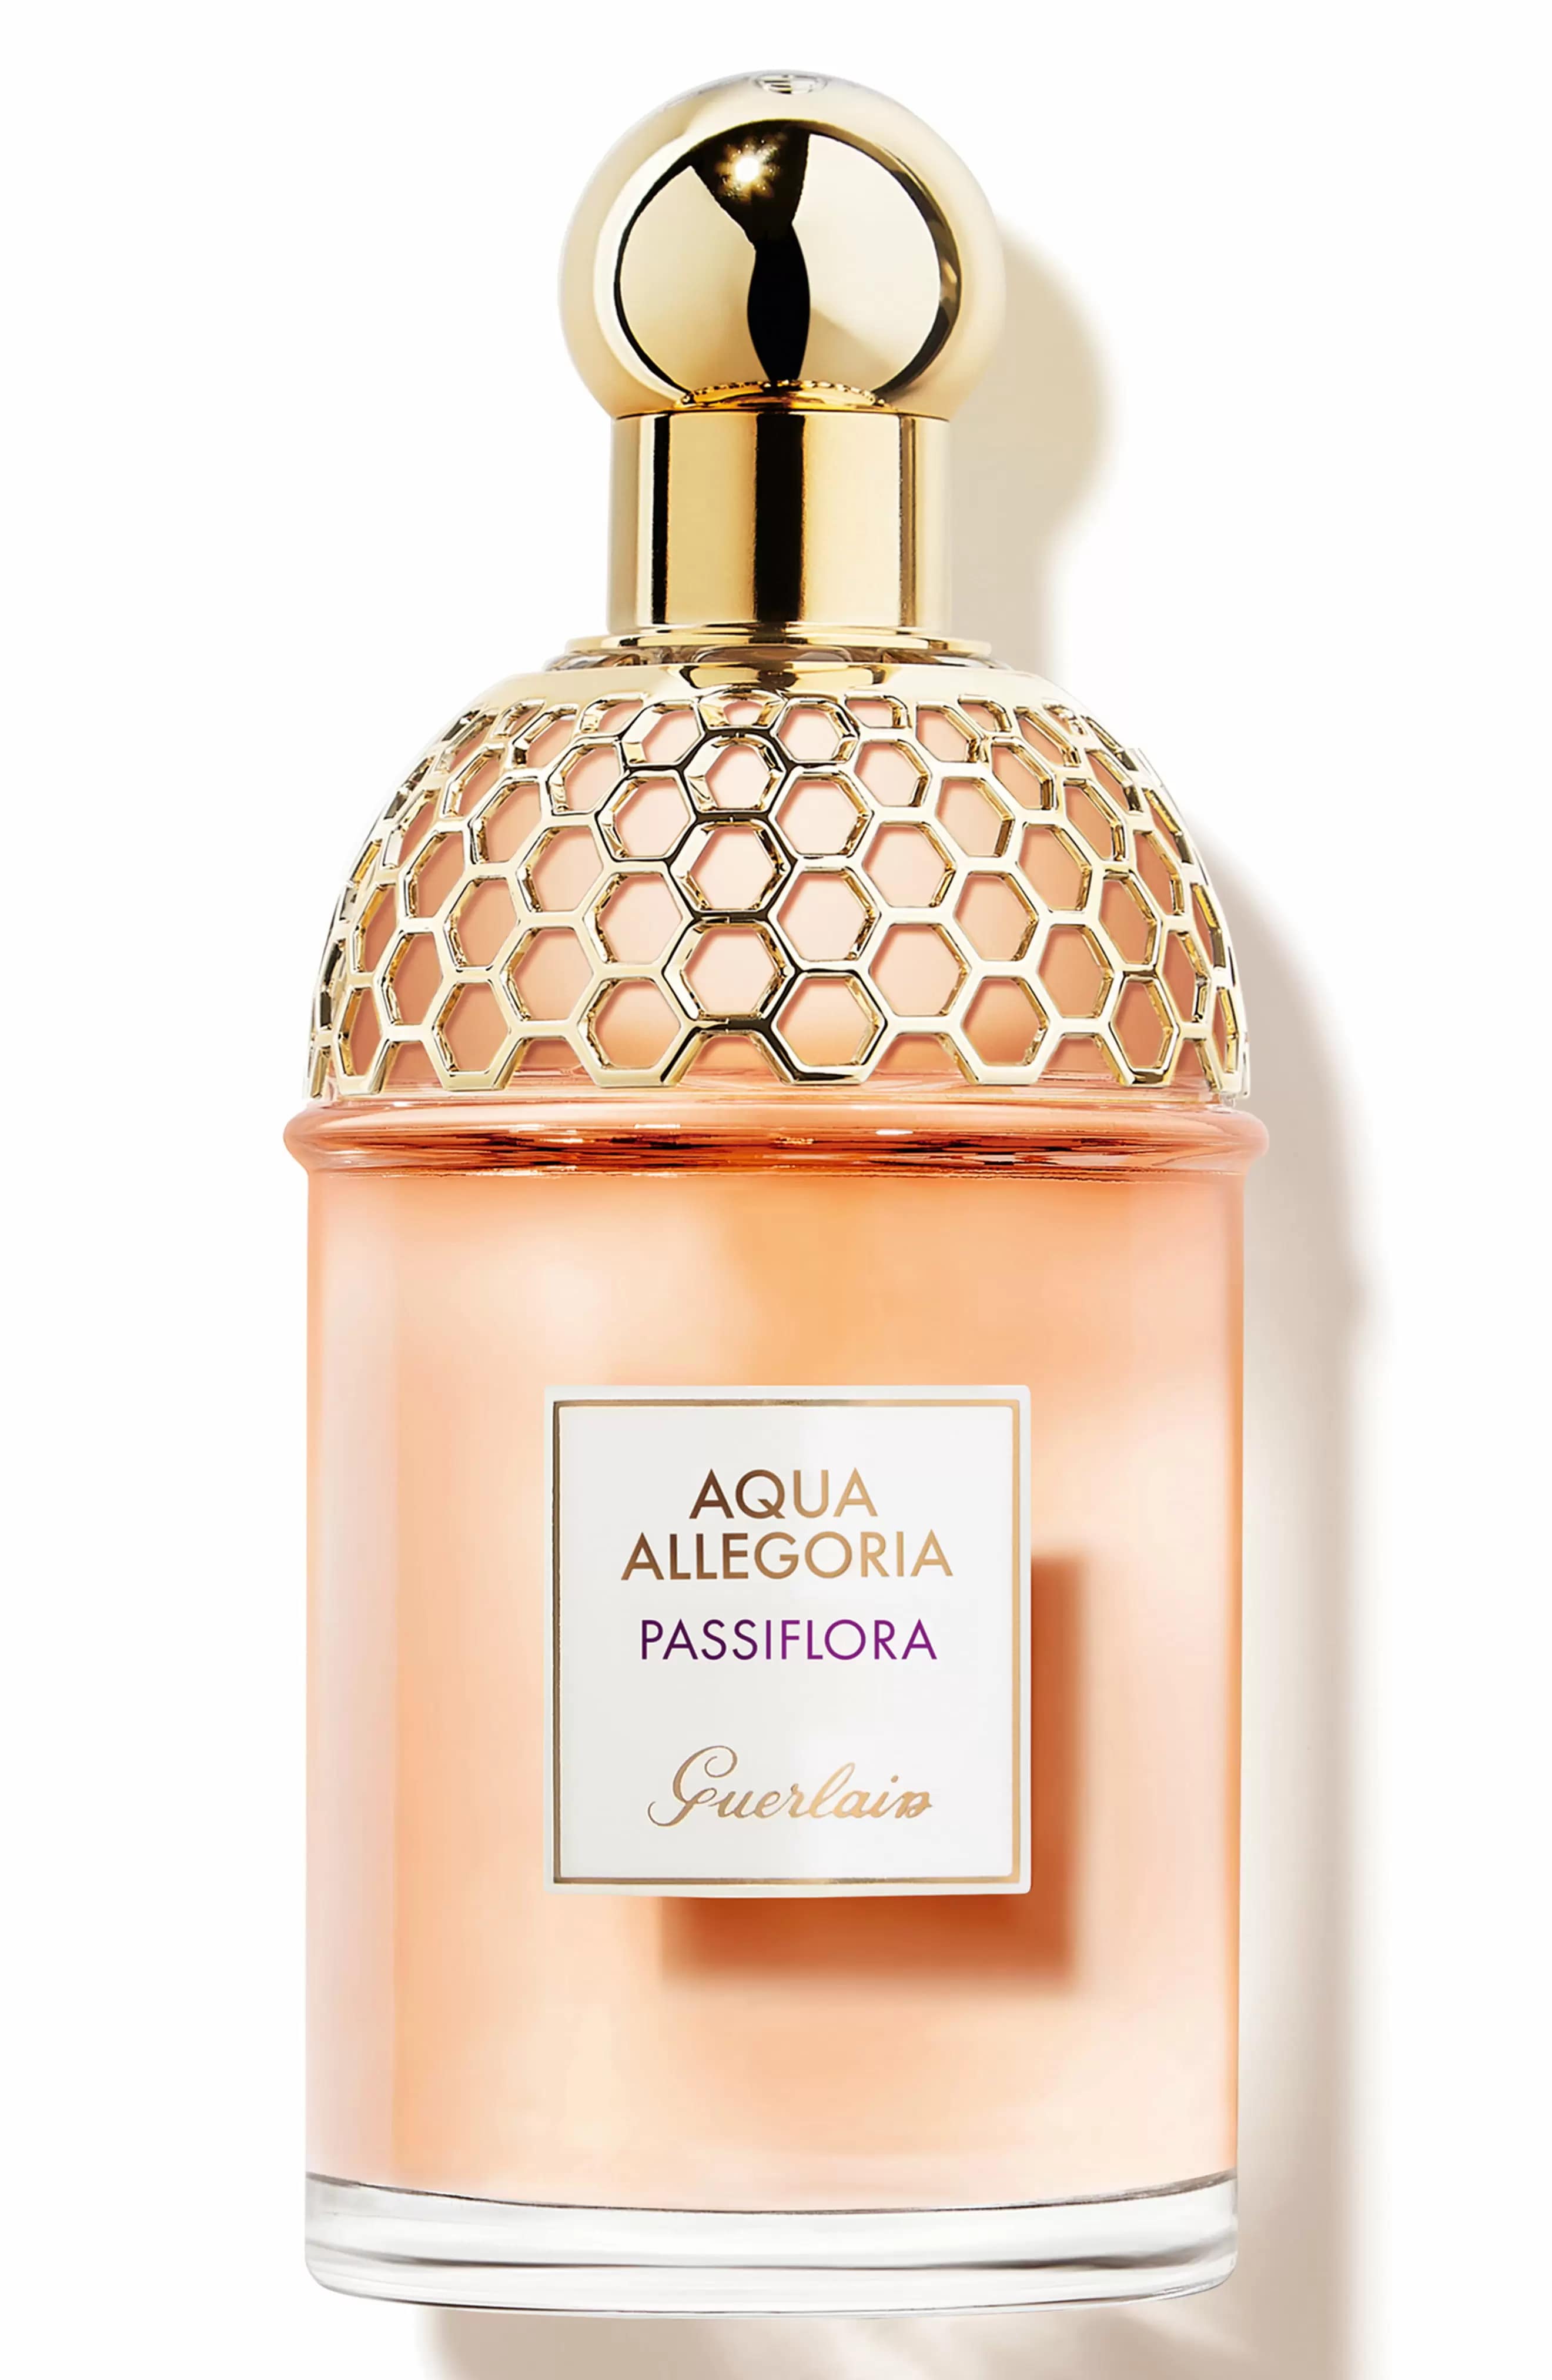 Guerlain Aqua Allegoria Passiflora EDT Perfume for Women by Guerlain